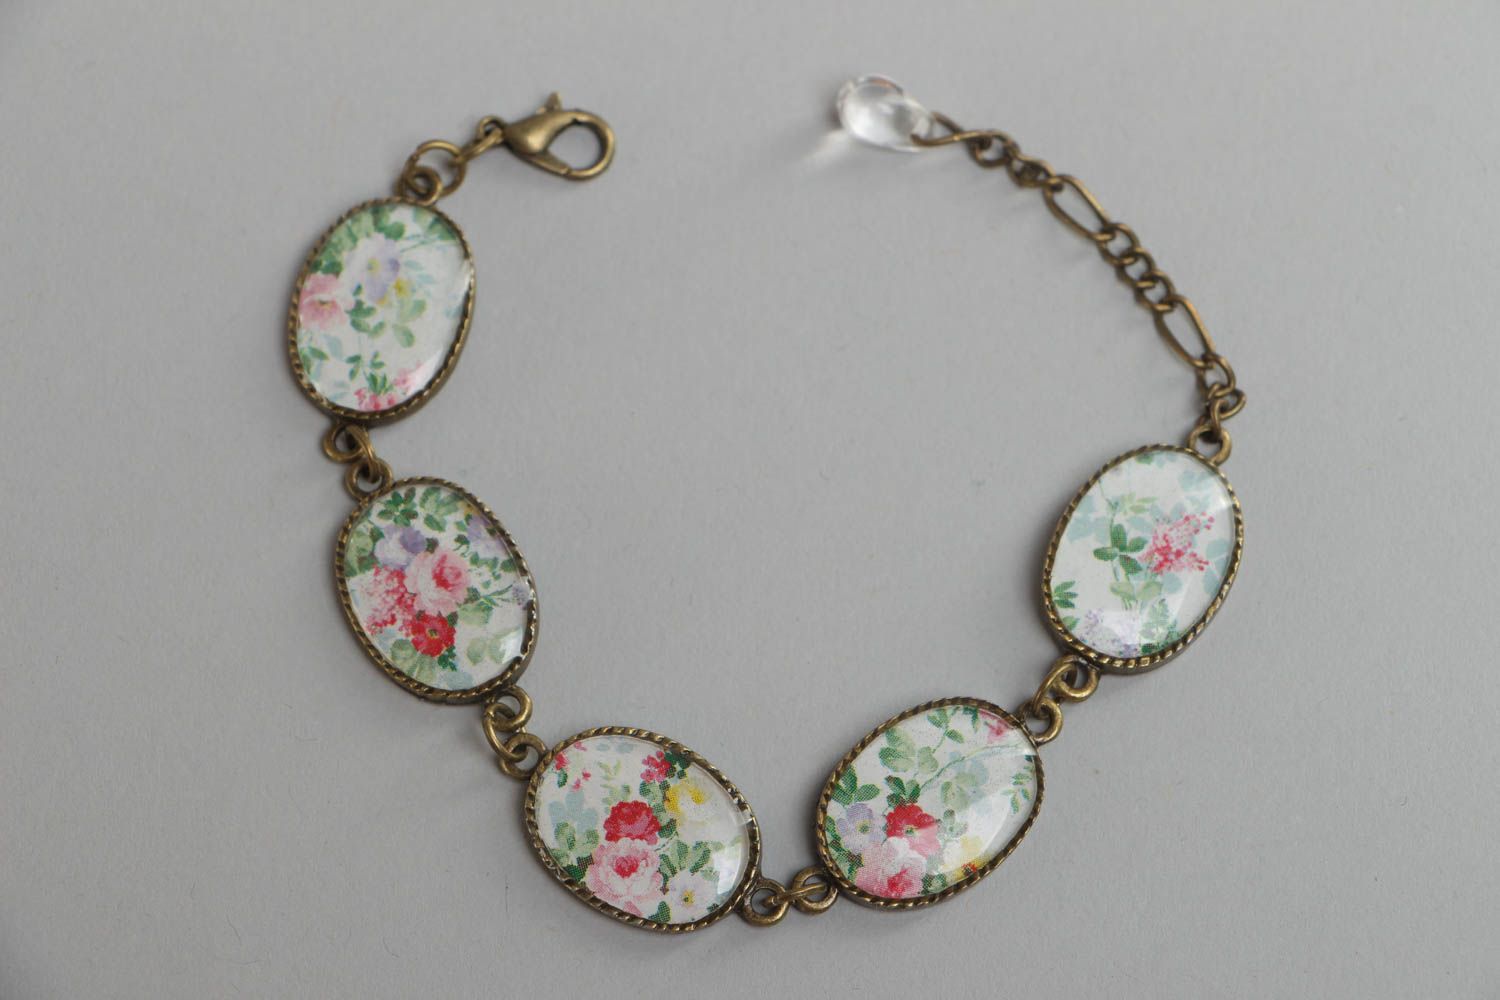 Handmade metal and glass glaze wrist bracelet with chain and flower pattern photo 2